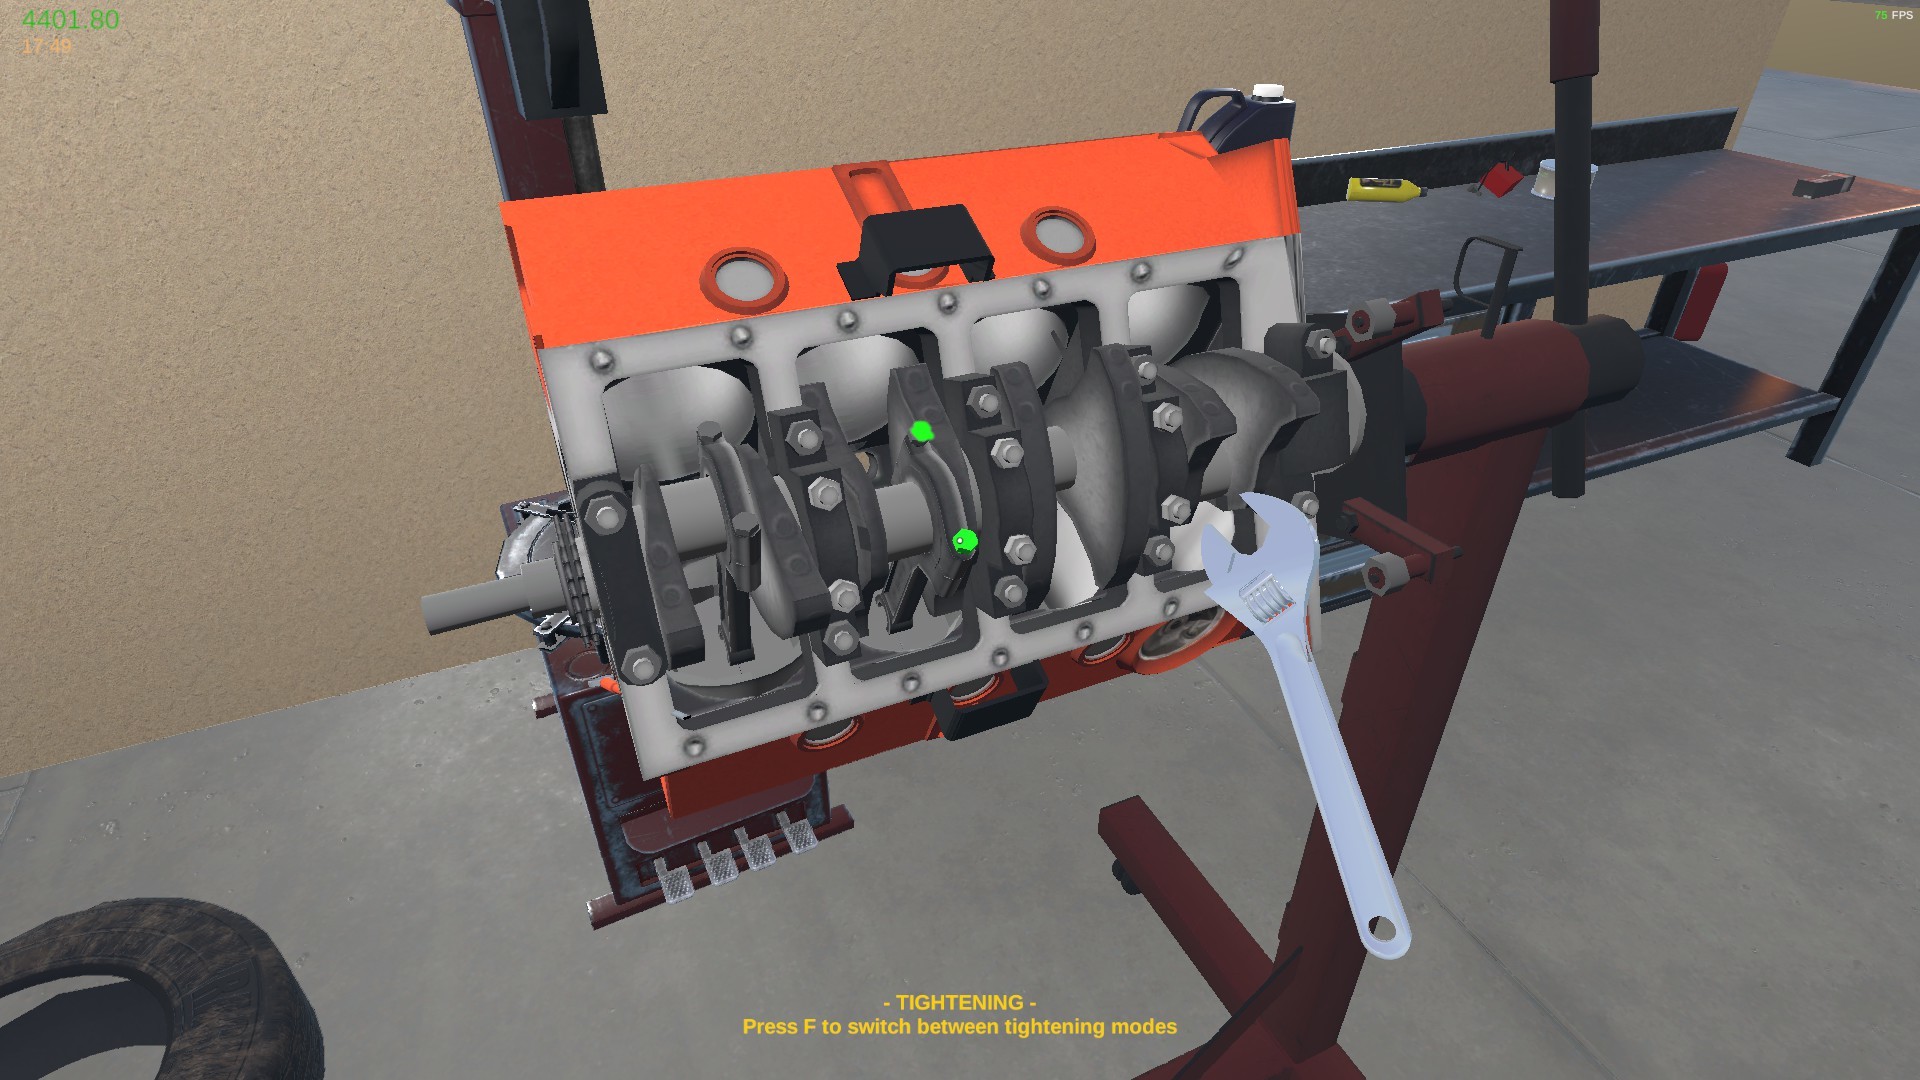 My Garage How to build a V8 engine guide - 2. Engine Block - A9937EC